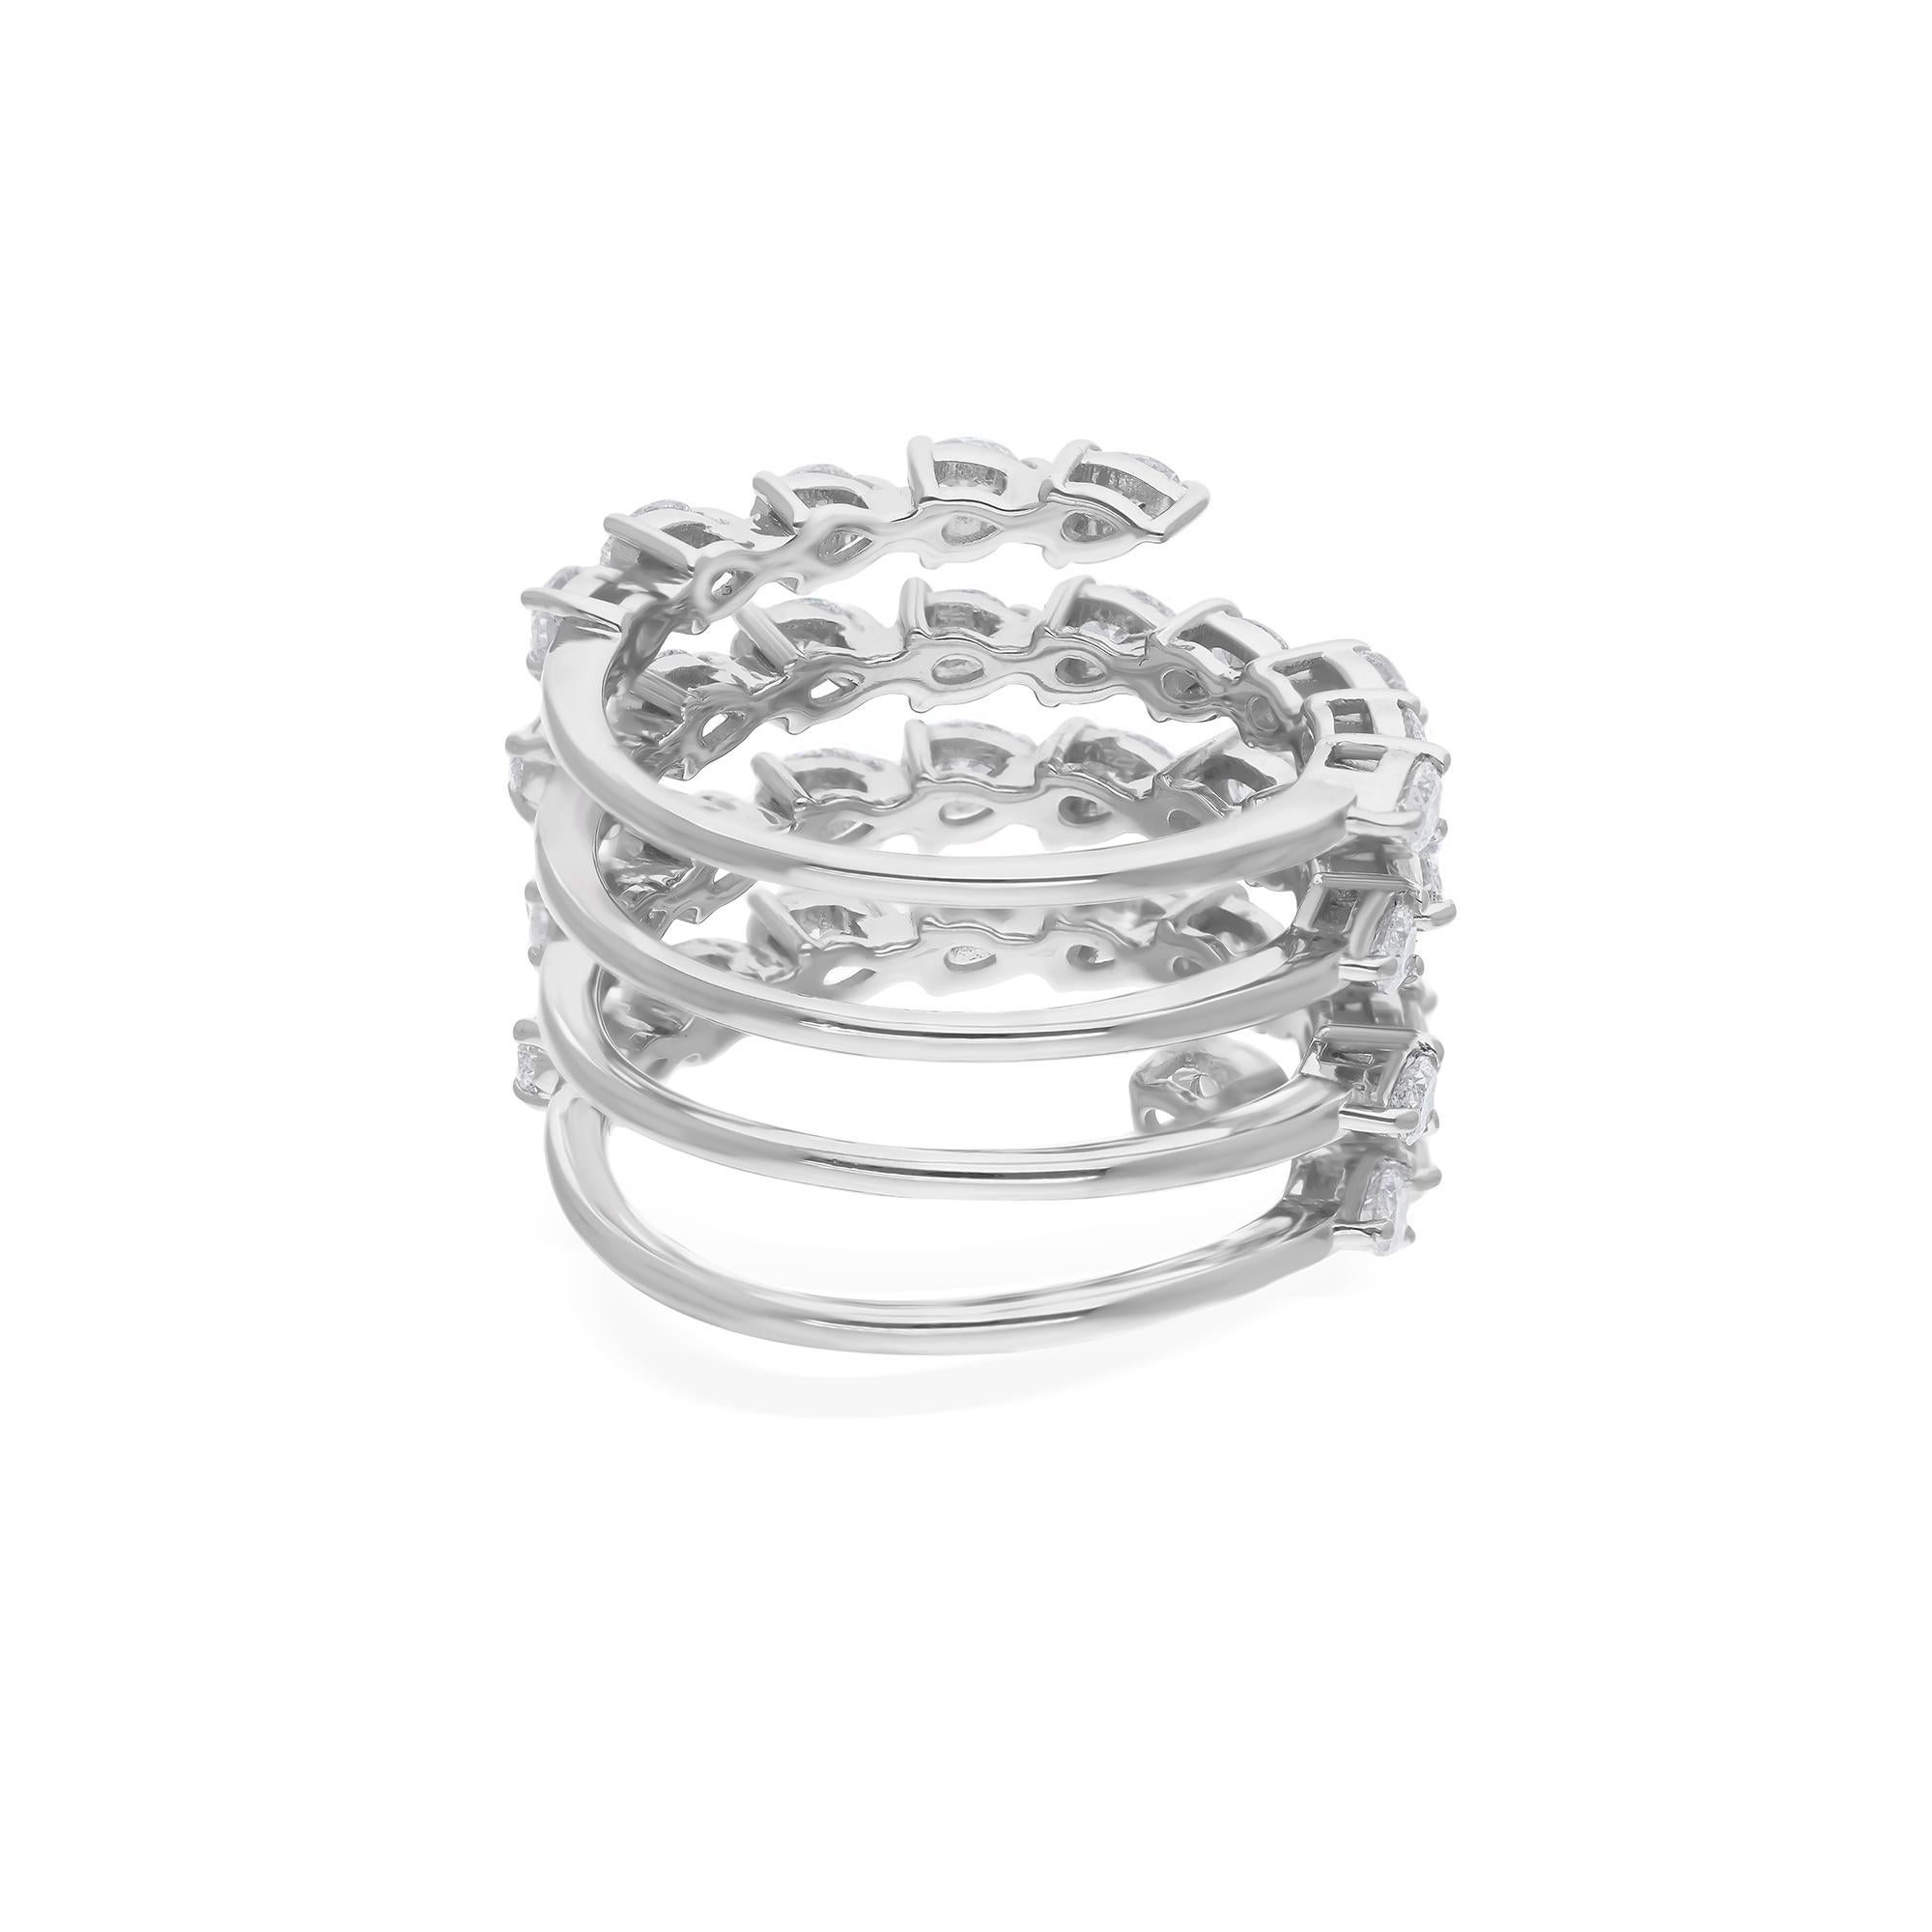 2.08 Carat Oval Shape Diamond Spiral Ring 14 Karat White Gold Handmade Jewelry For Sale 2